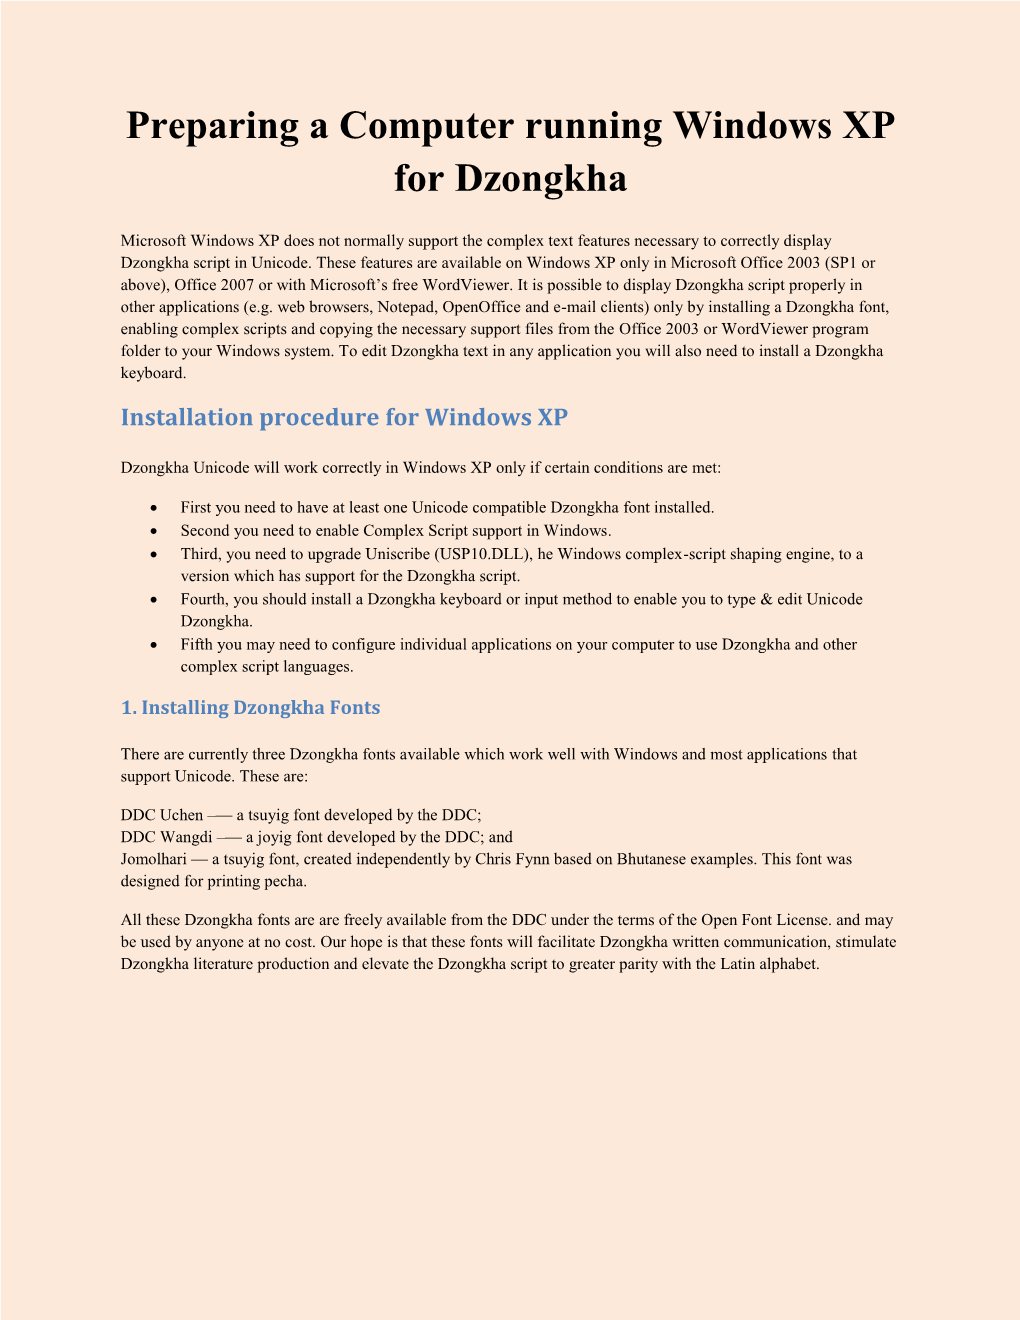 Preparing a Computer Running Windows XP for Dzongkha